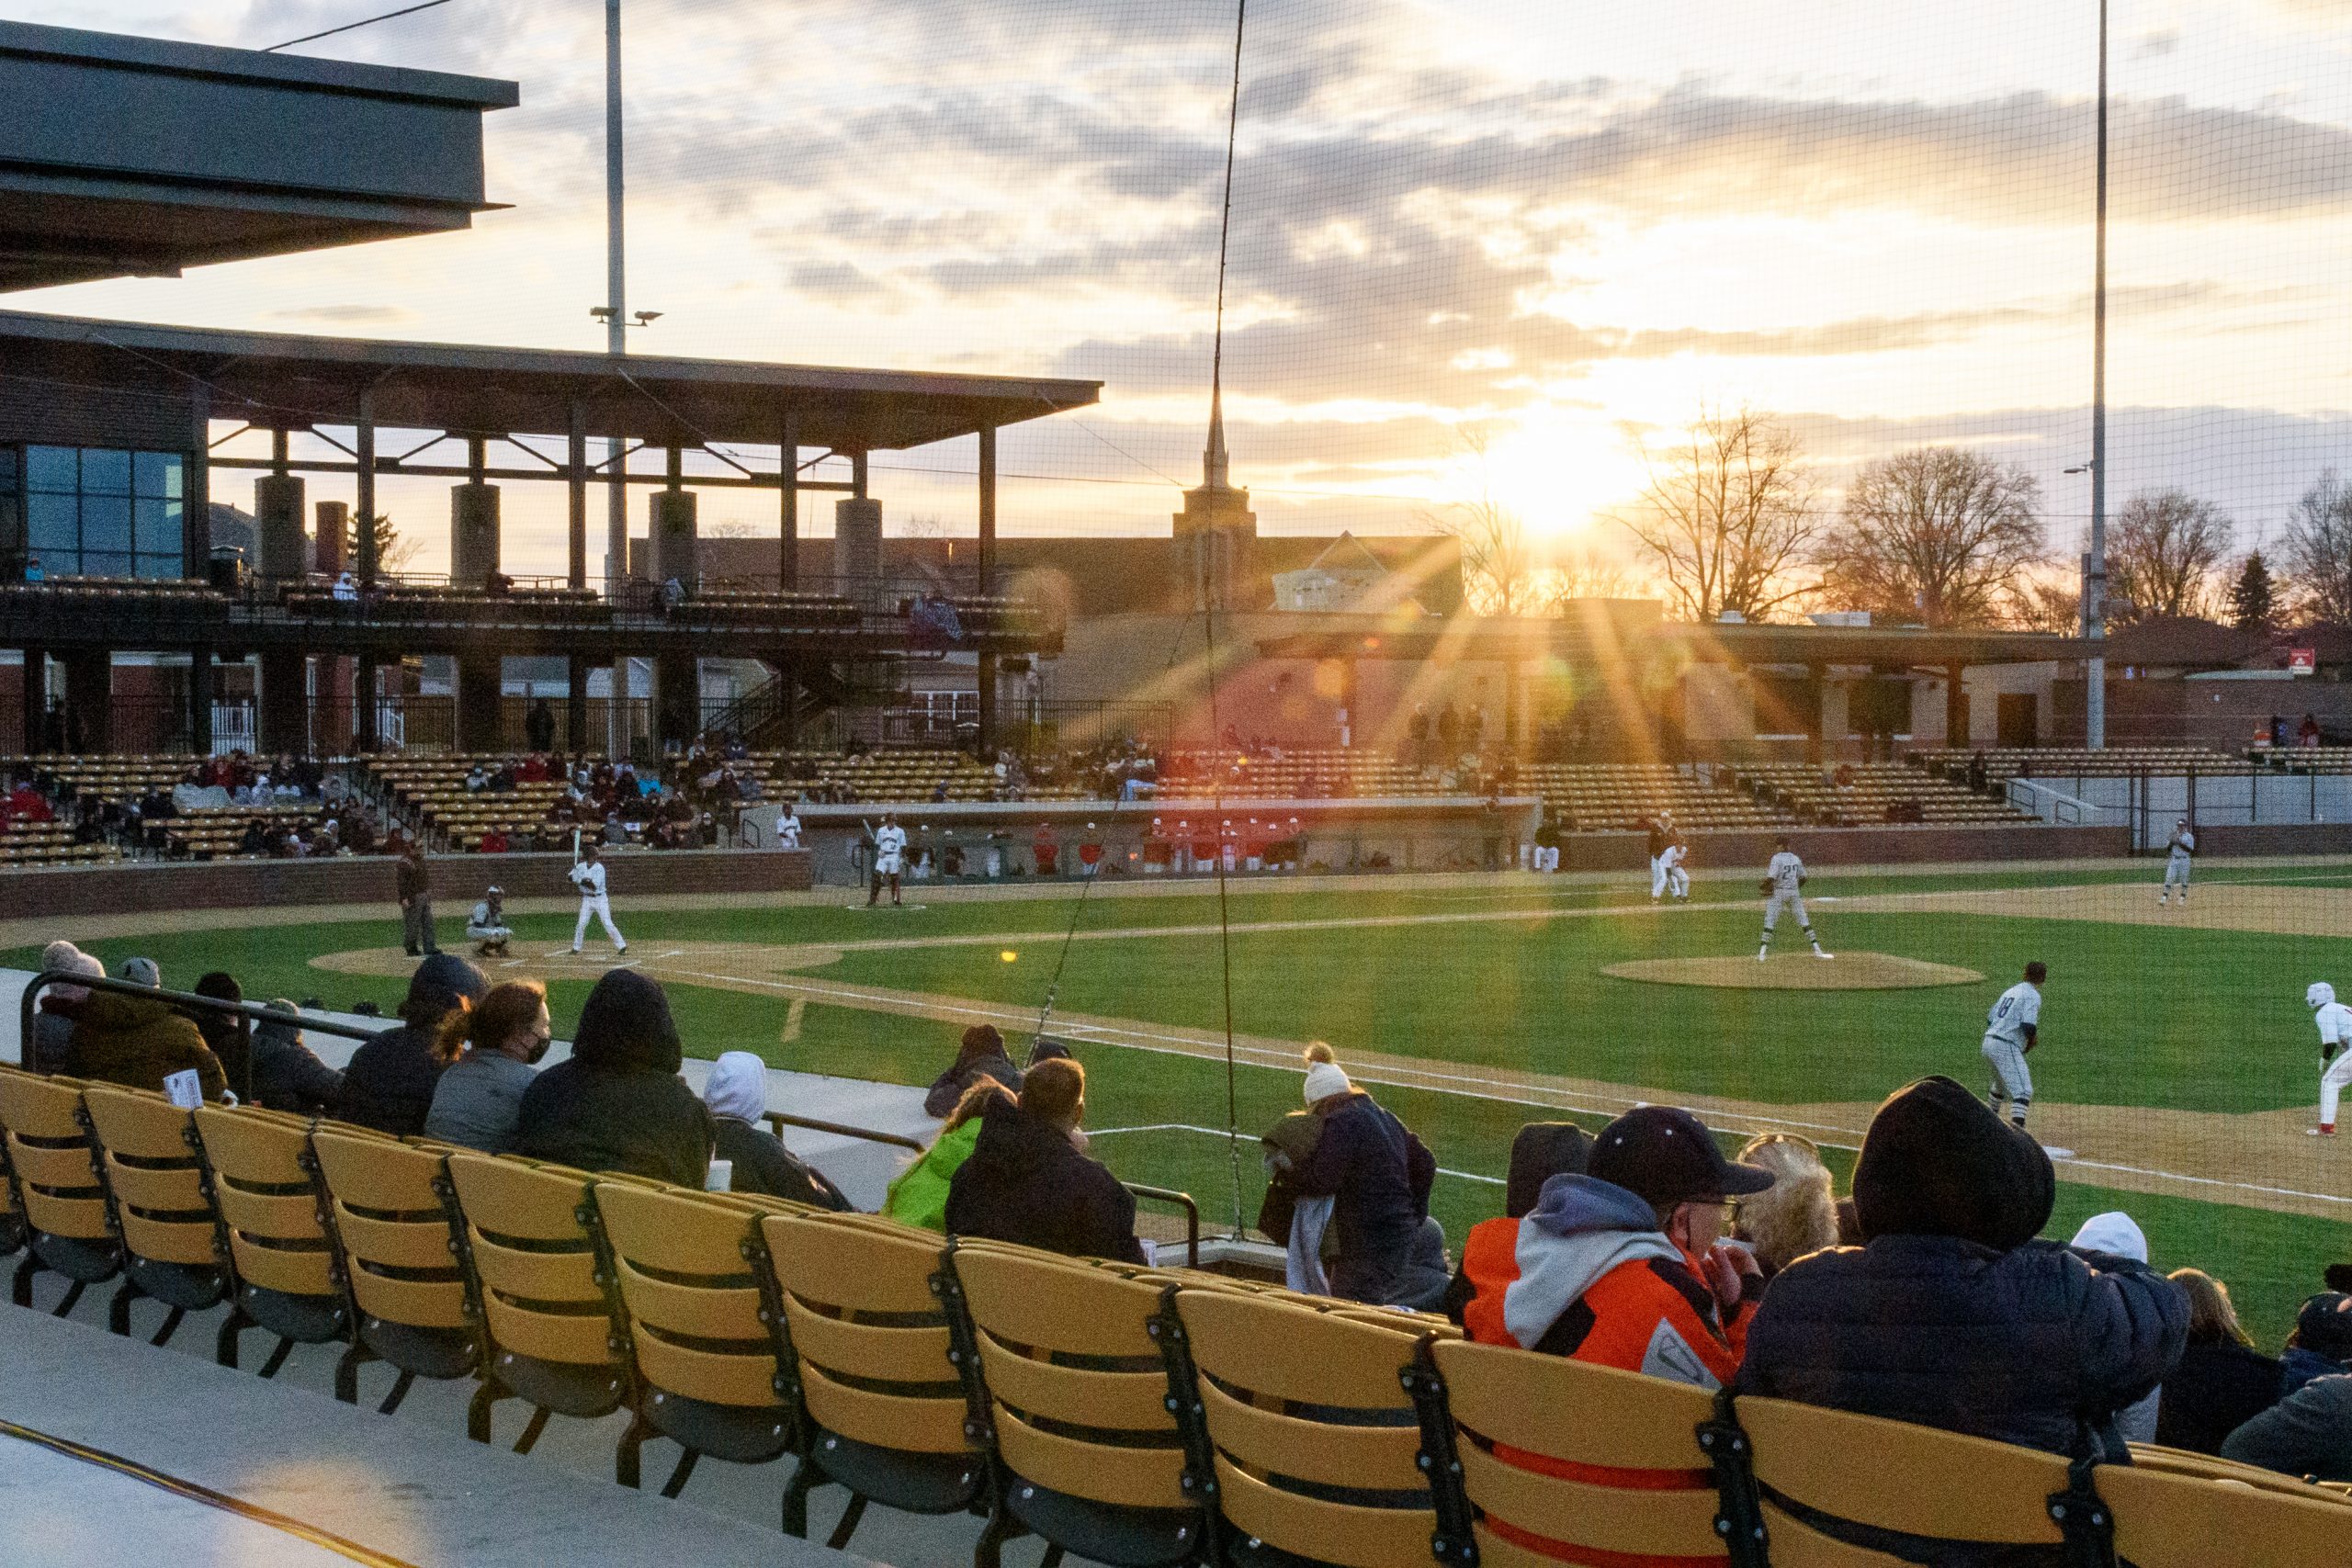 Loeb Stadium Baseball Field in Lafayette Indiana